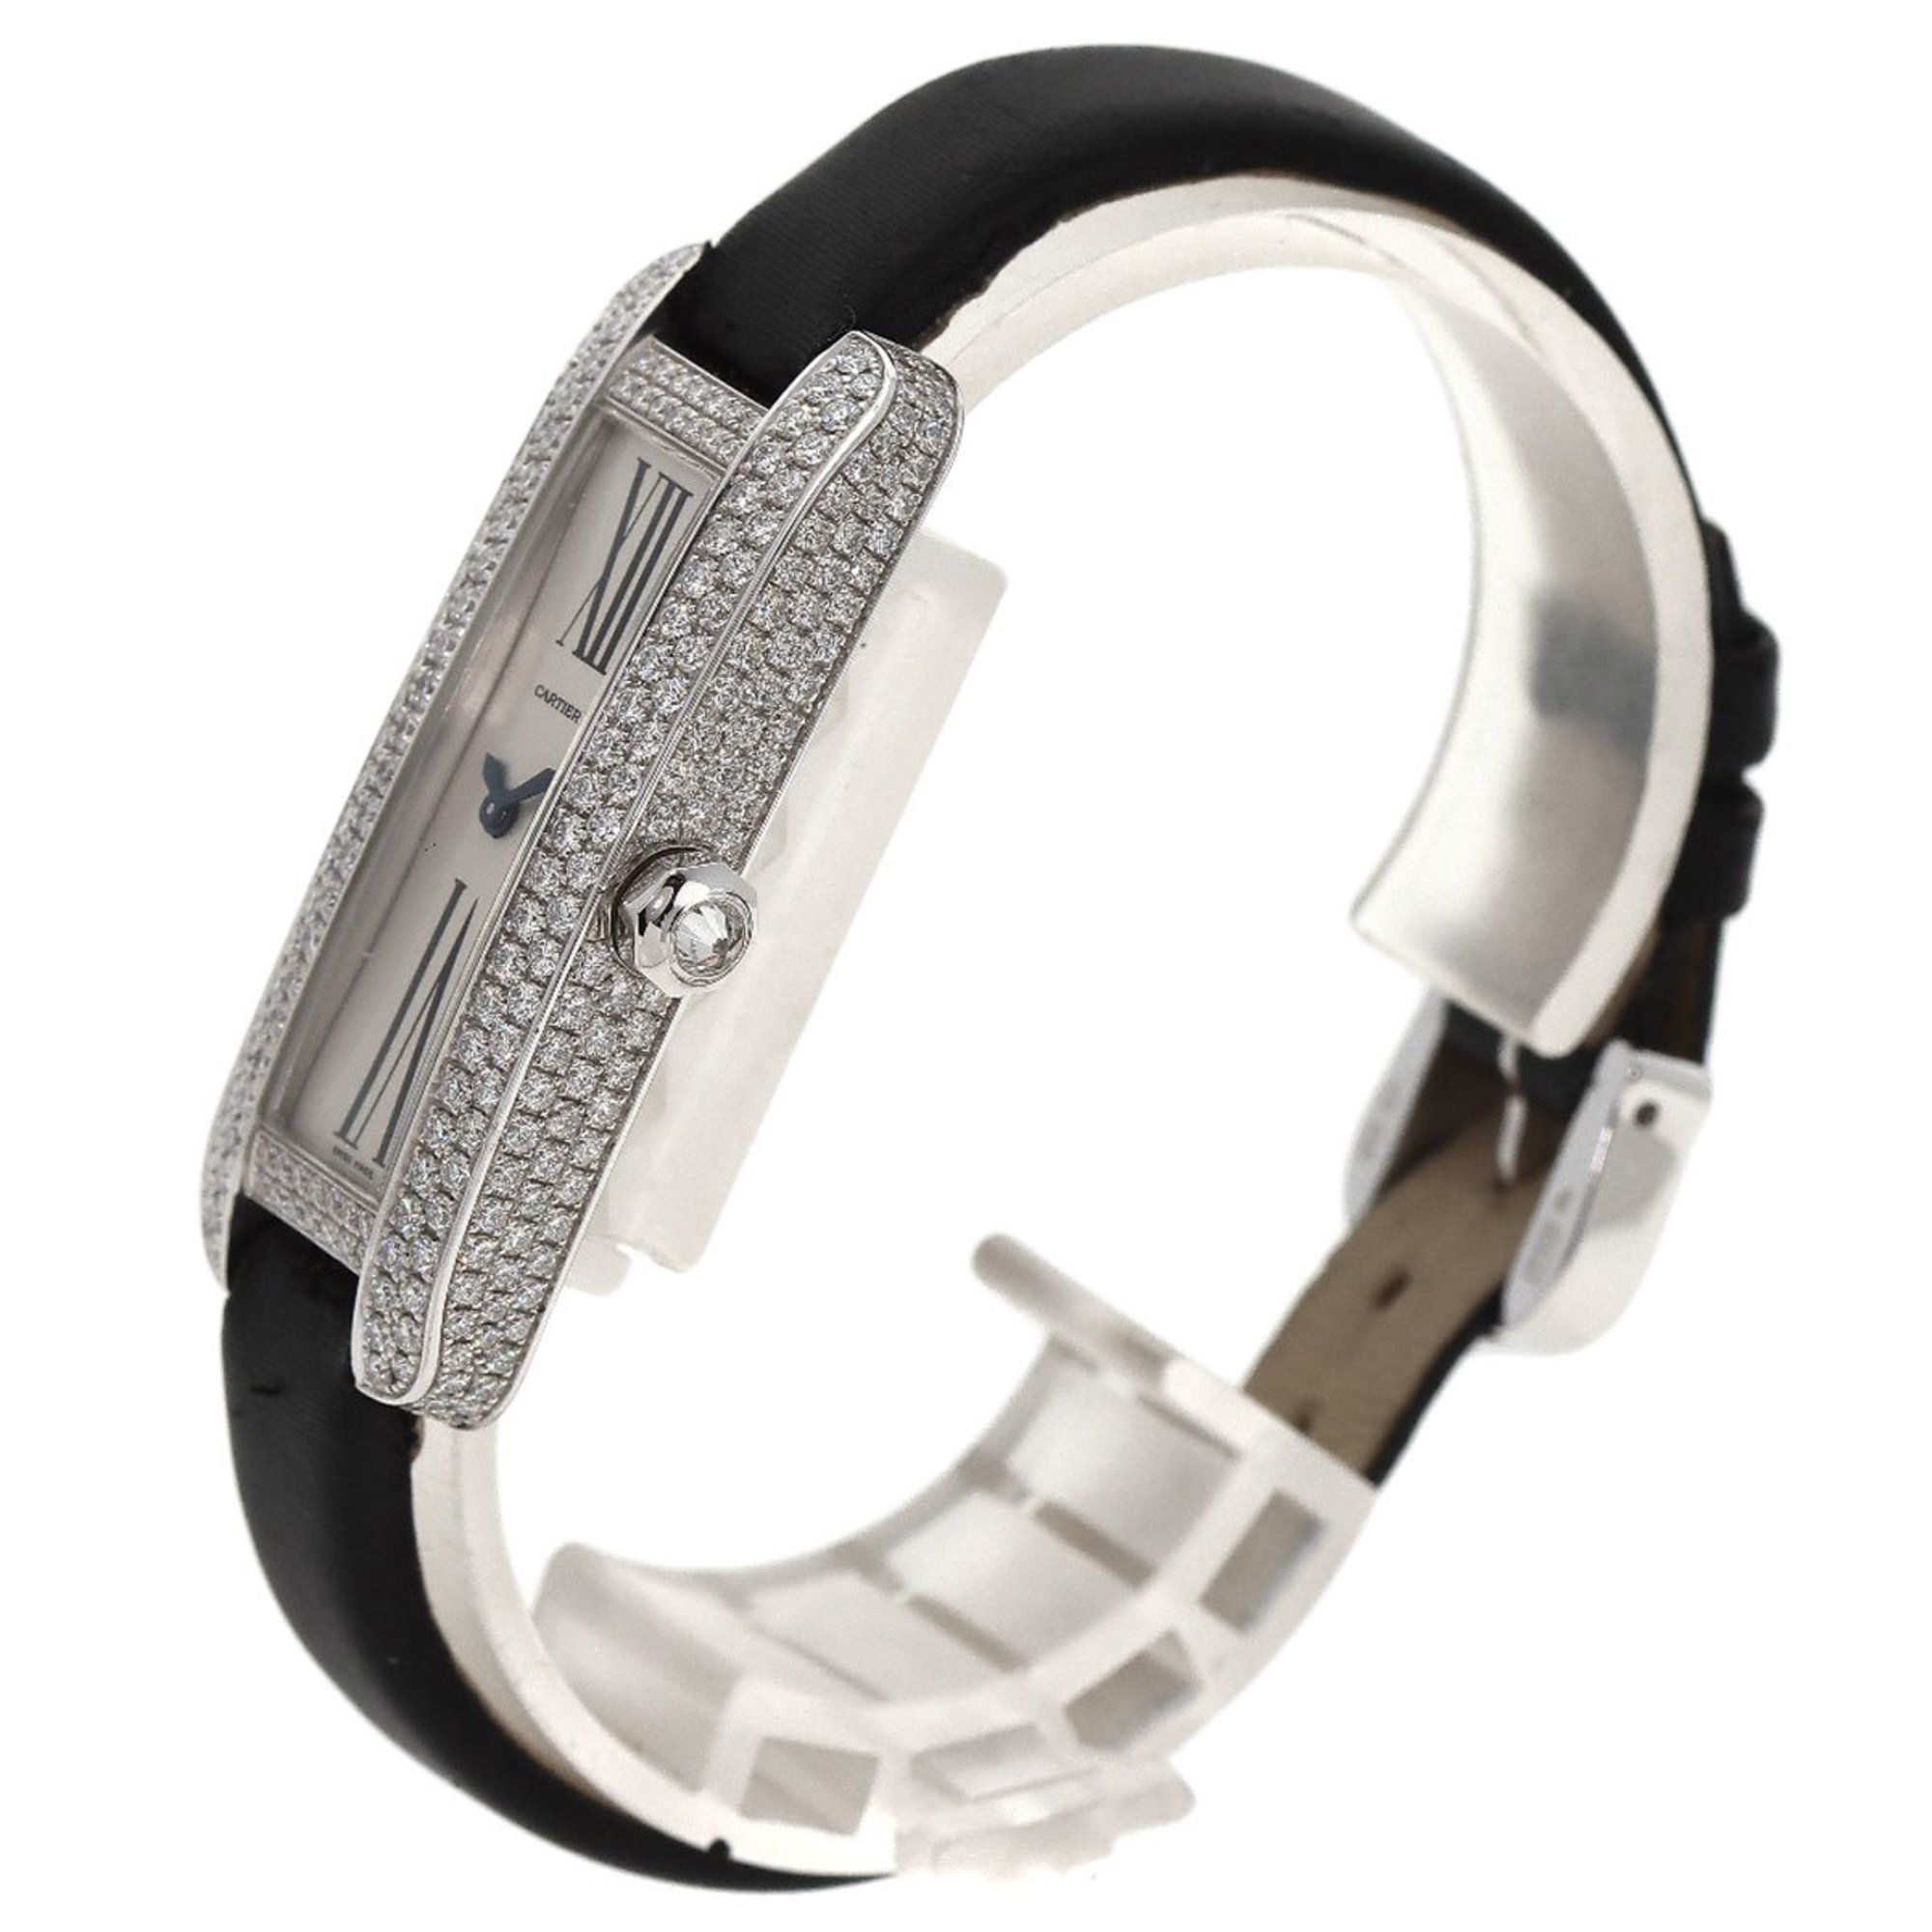 Cartier WJ300950 Tank S Watch, 18K White Gold, Leather, Diamonds, Women's